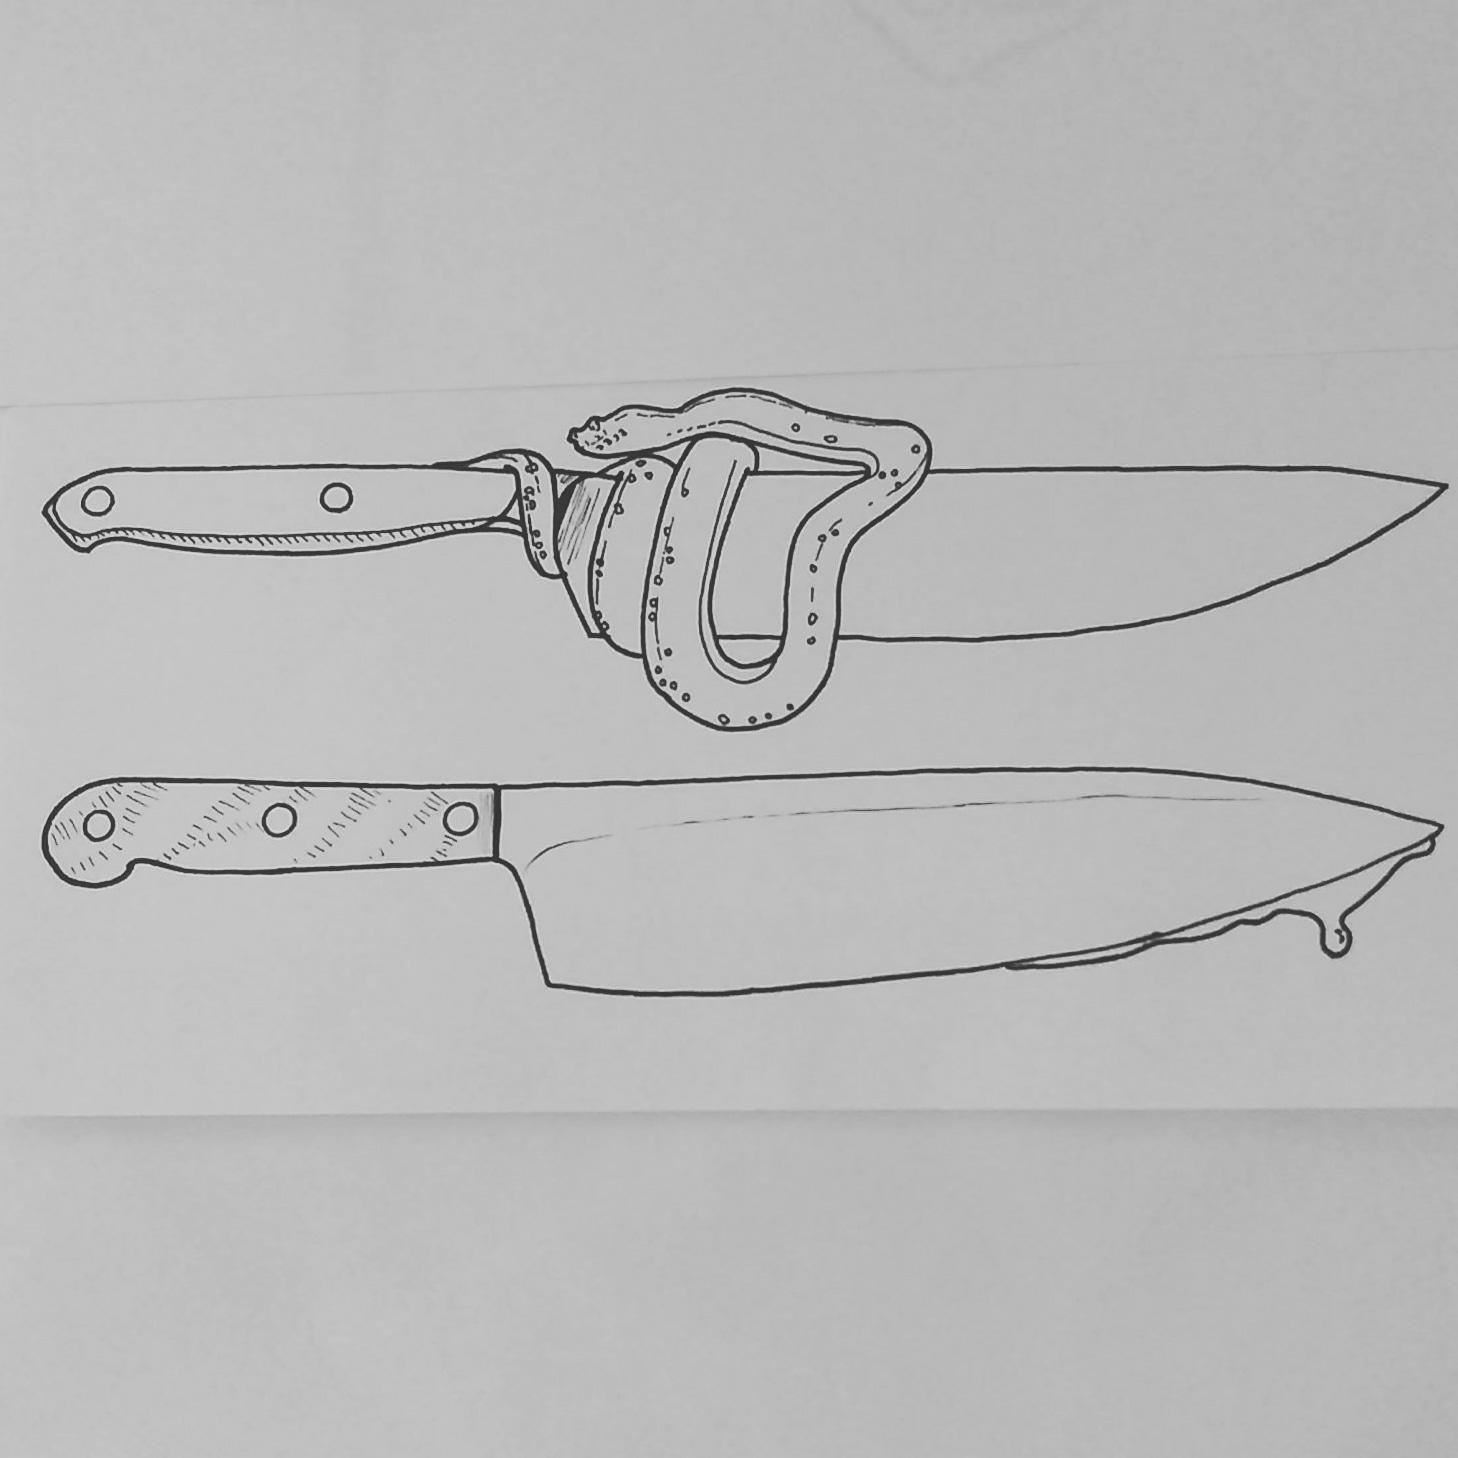 Нож карандашом легко. Нож рисунок. Ножик рисунок карандашом. Кинжал рисунок. Нарисовать нож.